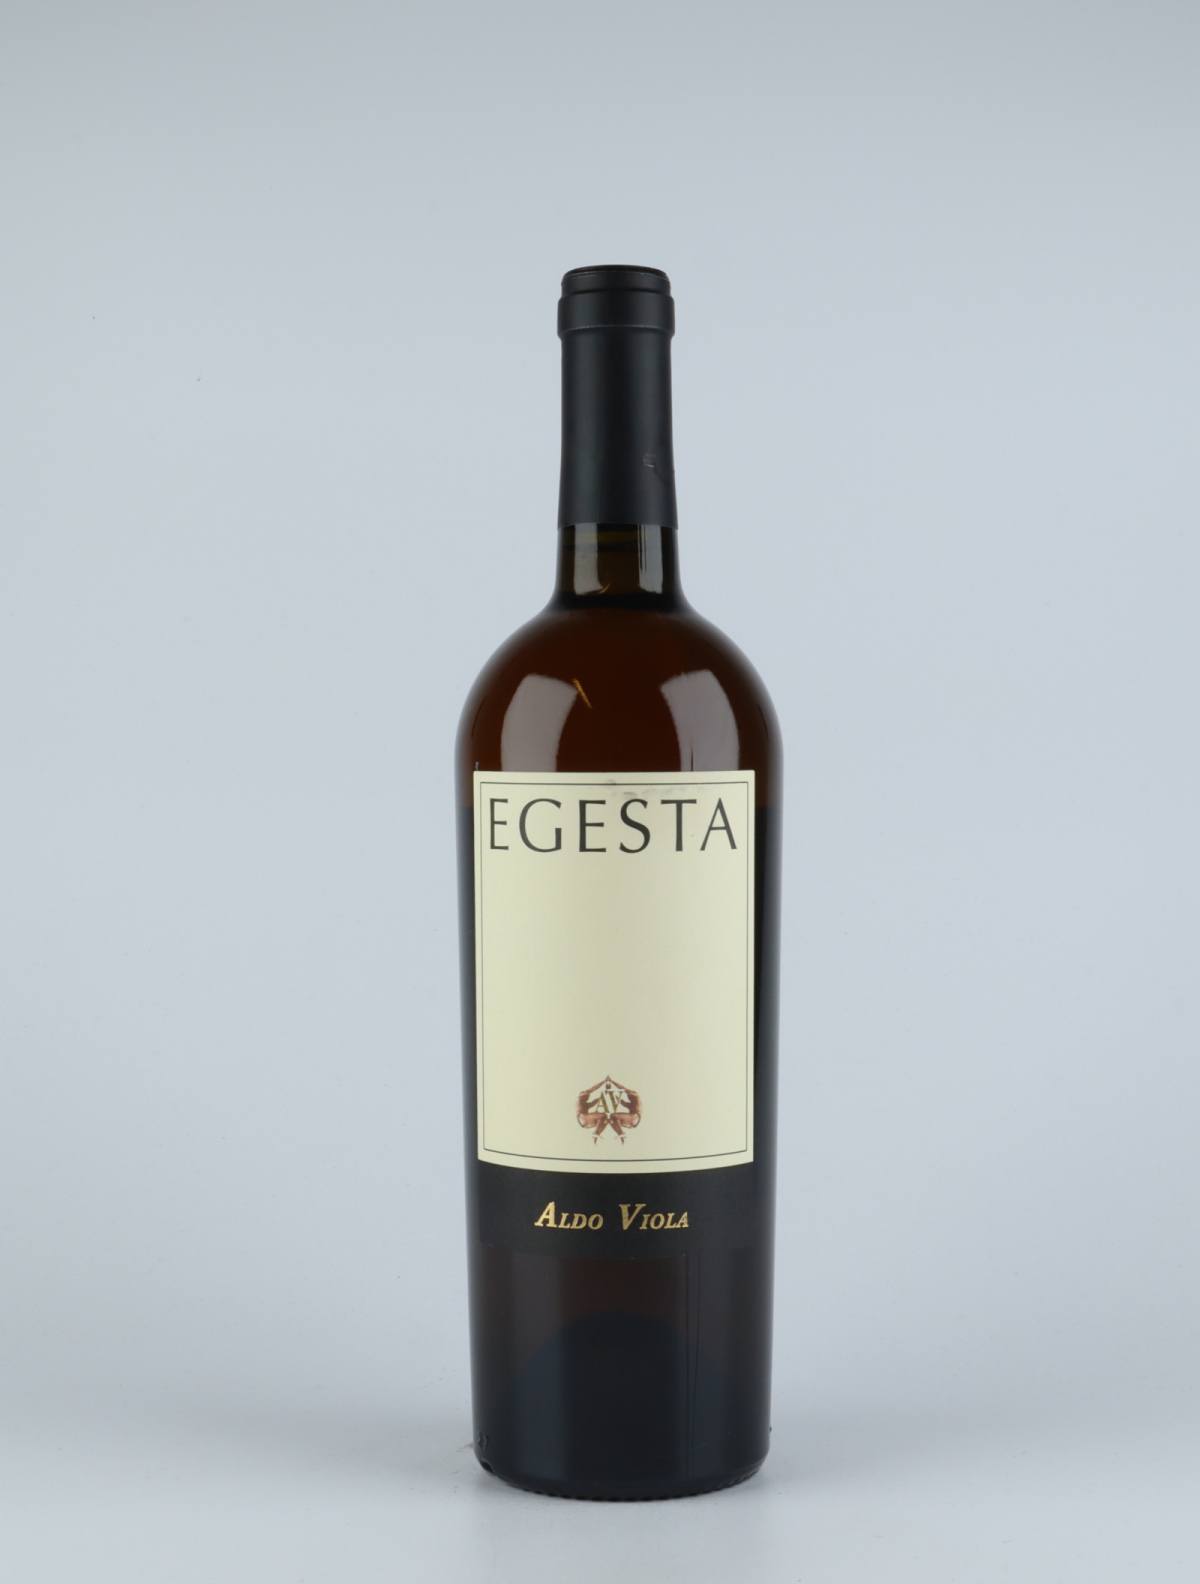 A bottle 2017 Egesta Grillo Bianco Orange wine from Aldo Viola, Sicily in Italy